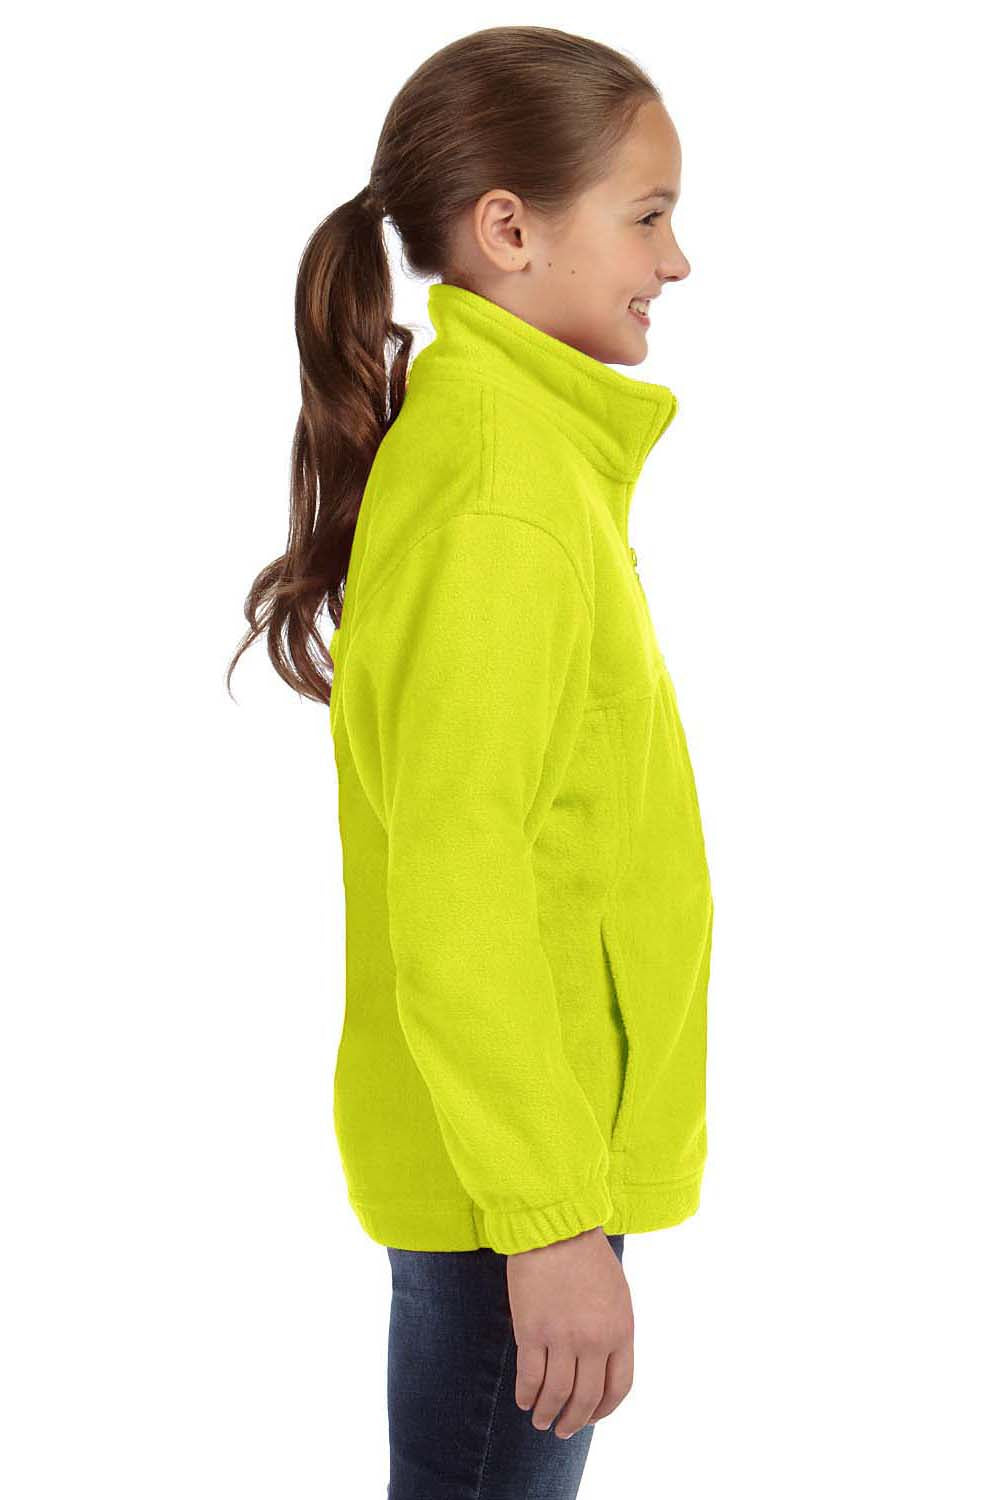 Harriton M990Y Youth Full Zip Fleece Jacket Safety Yellow Side